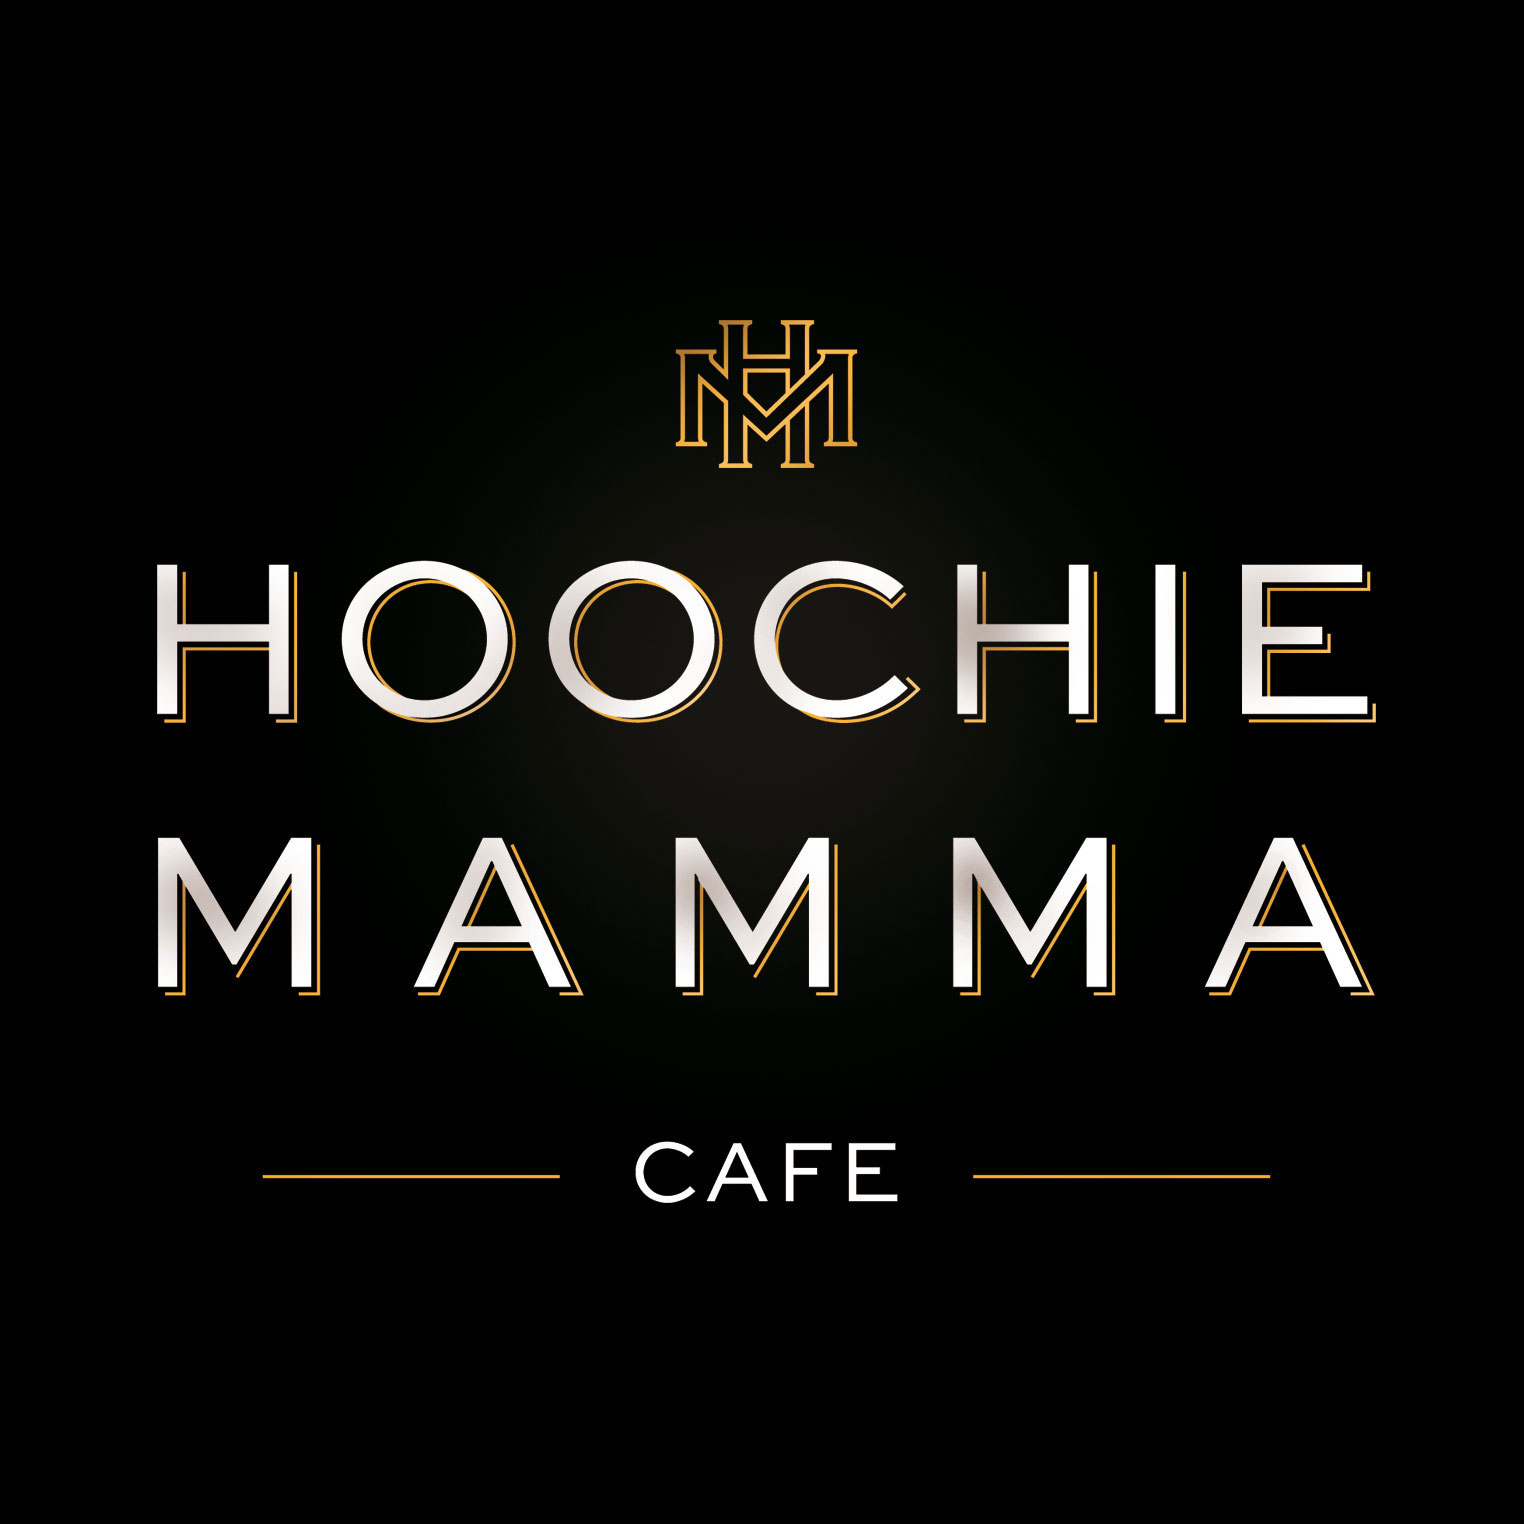 Hoochie Mamma Cafe